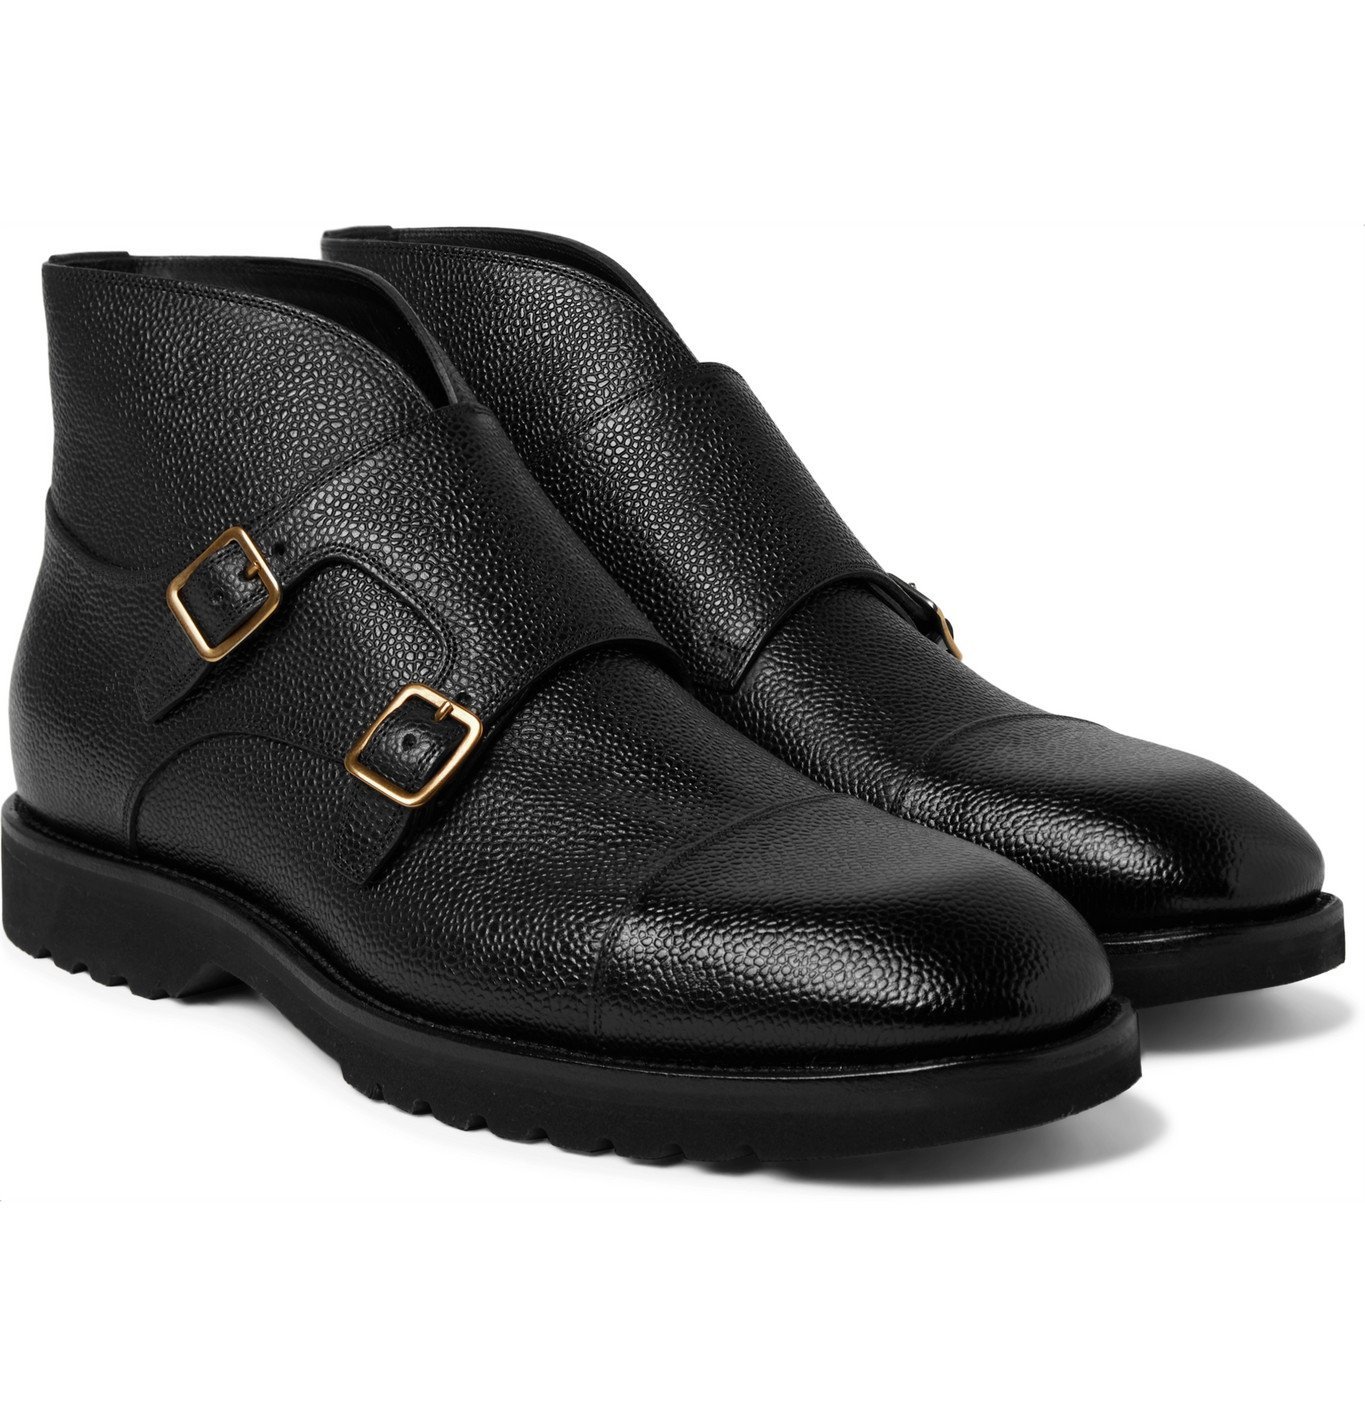 TOM FORD - Kensington Pebble-Grain Leather Monk-Strap Boots - Black TOM FORD